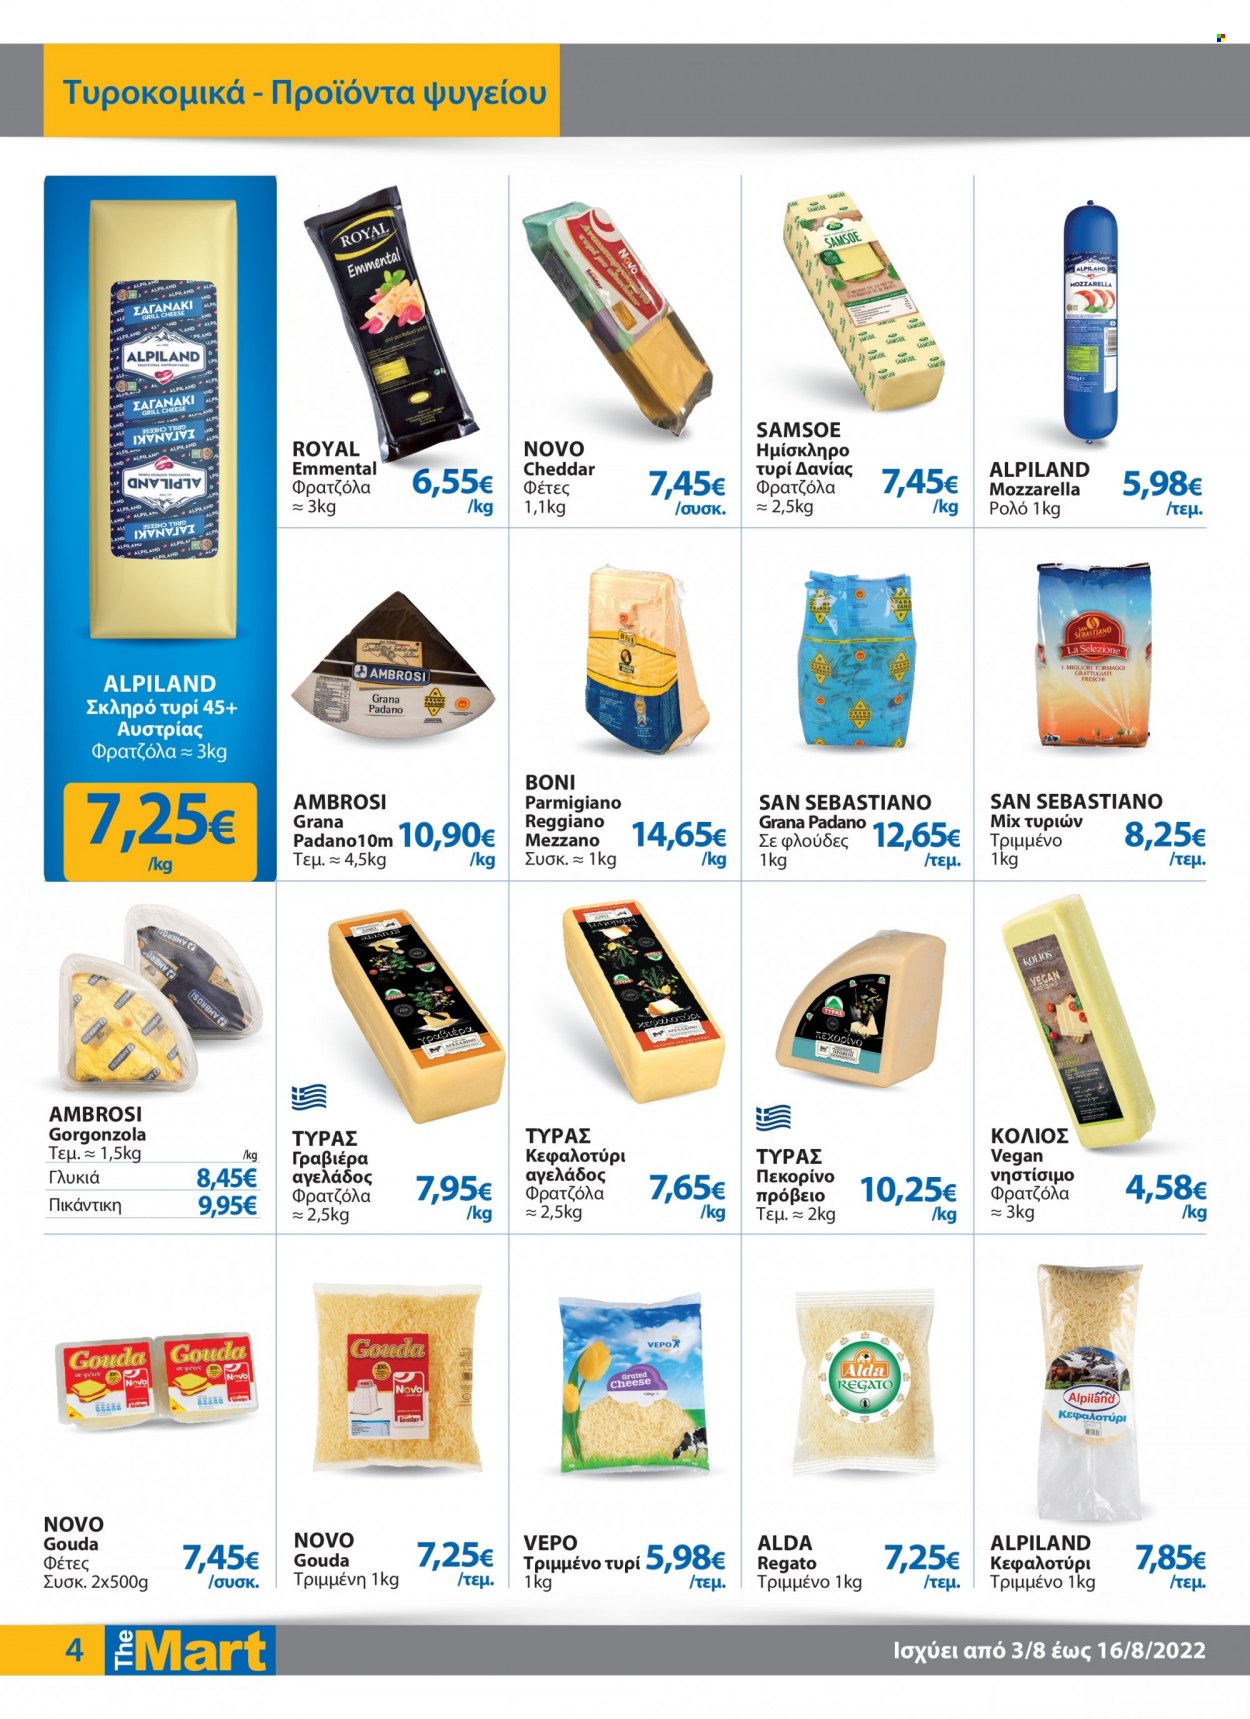 thumbnail - Φυλλάδια The Mart - 03.08.2022 - 16.08.2022 - Εκπτωτικά προϊόντα - ρολό, gouda, γραβιέρα, τριμμένο τυρί, μοτσαρέλα. Σελίδα 4.